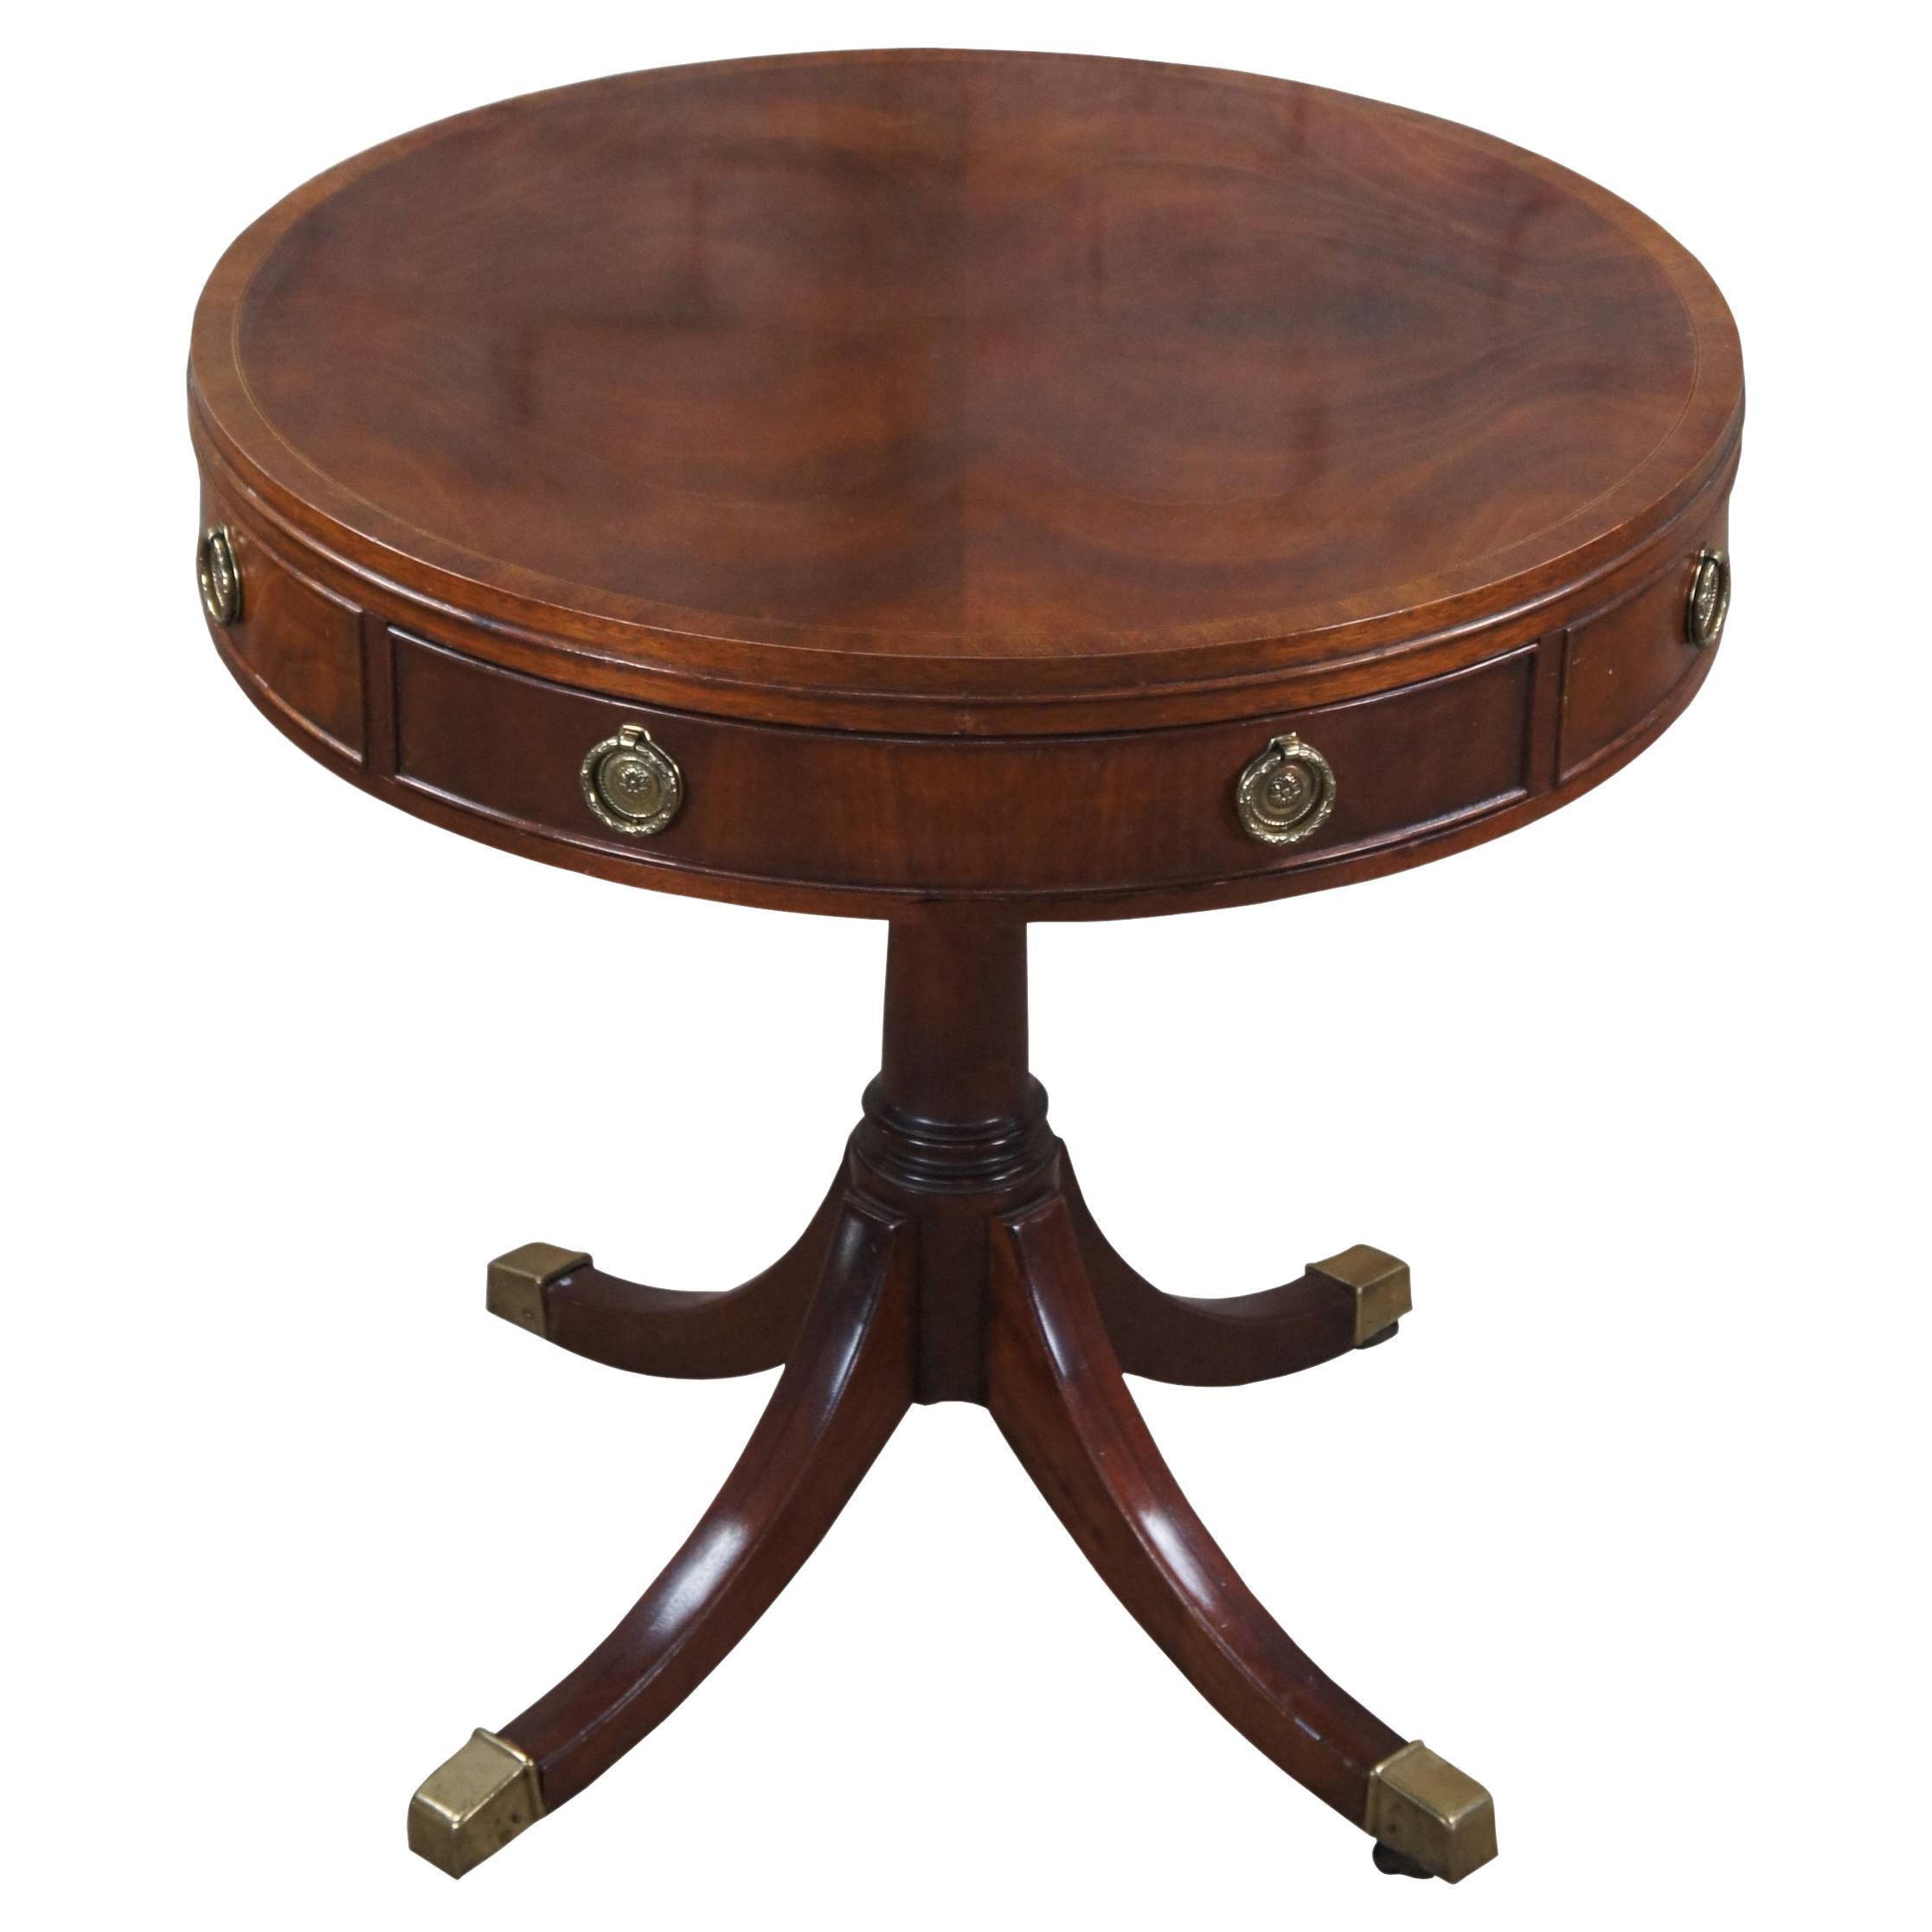 Baker Furniture English Sheraton George III Style Mahogany Drum Center Table 26"